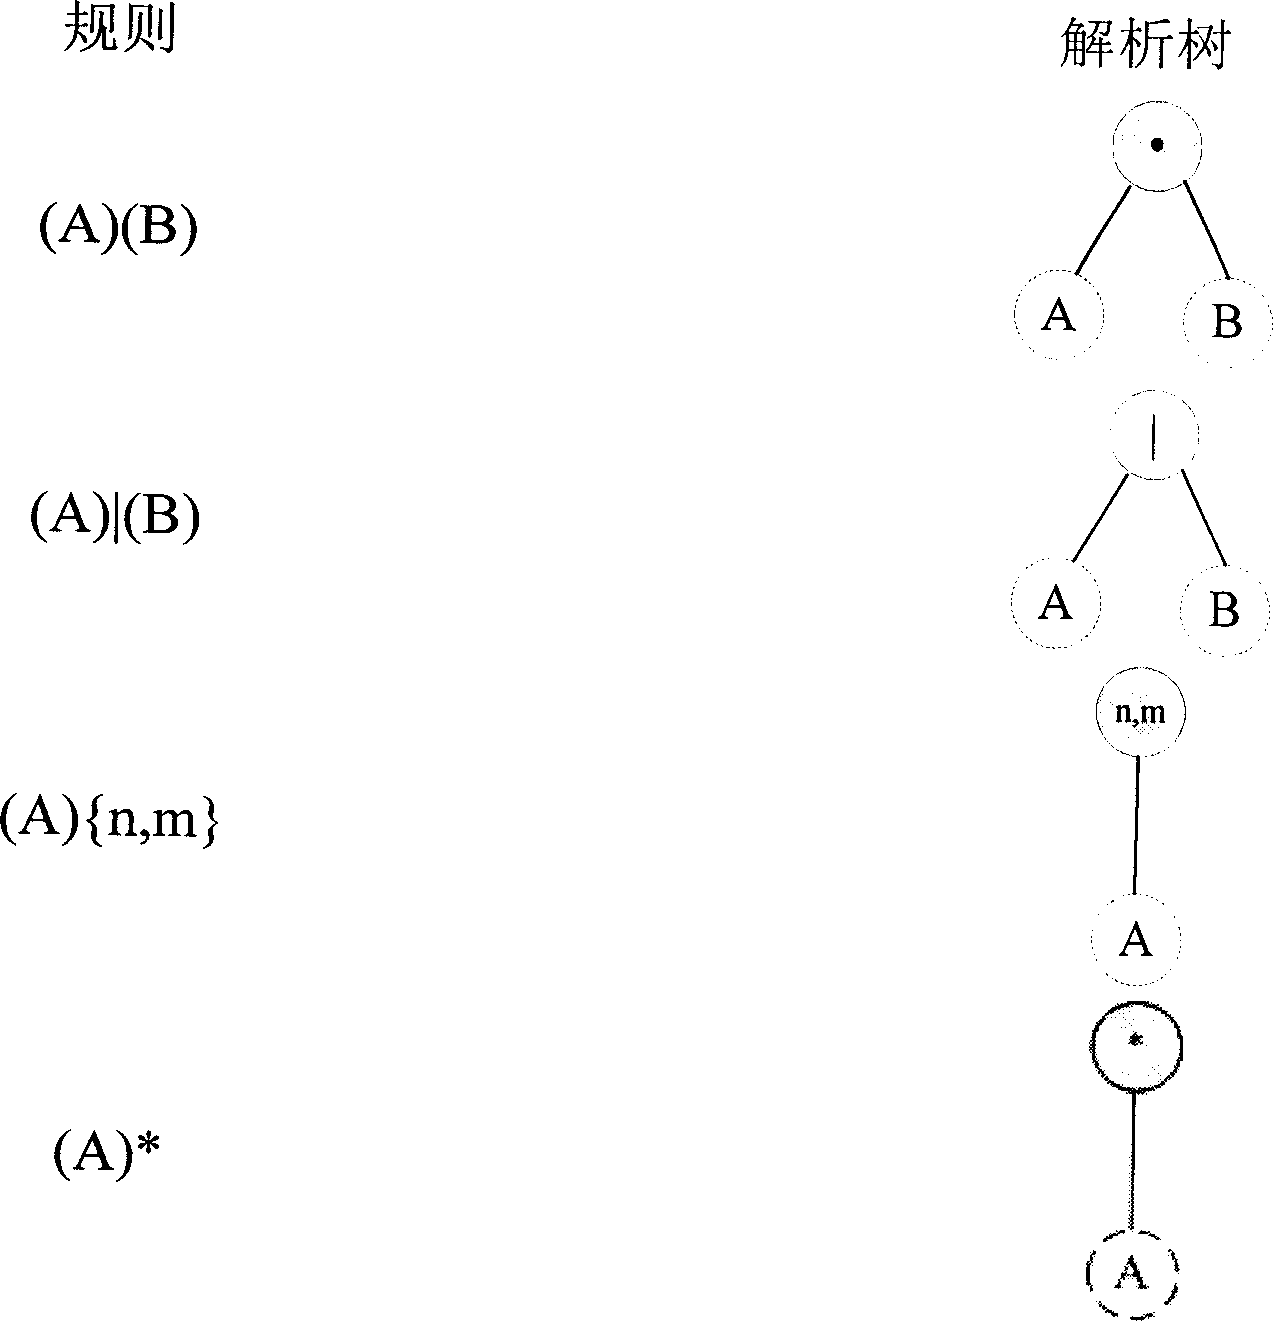 Method for matching in speedup regular expression based on finite automaton containing memorization determination